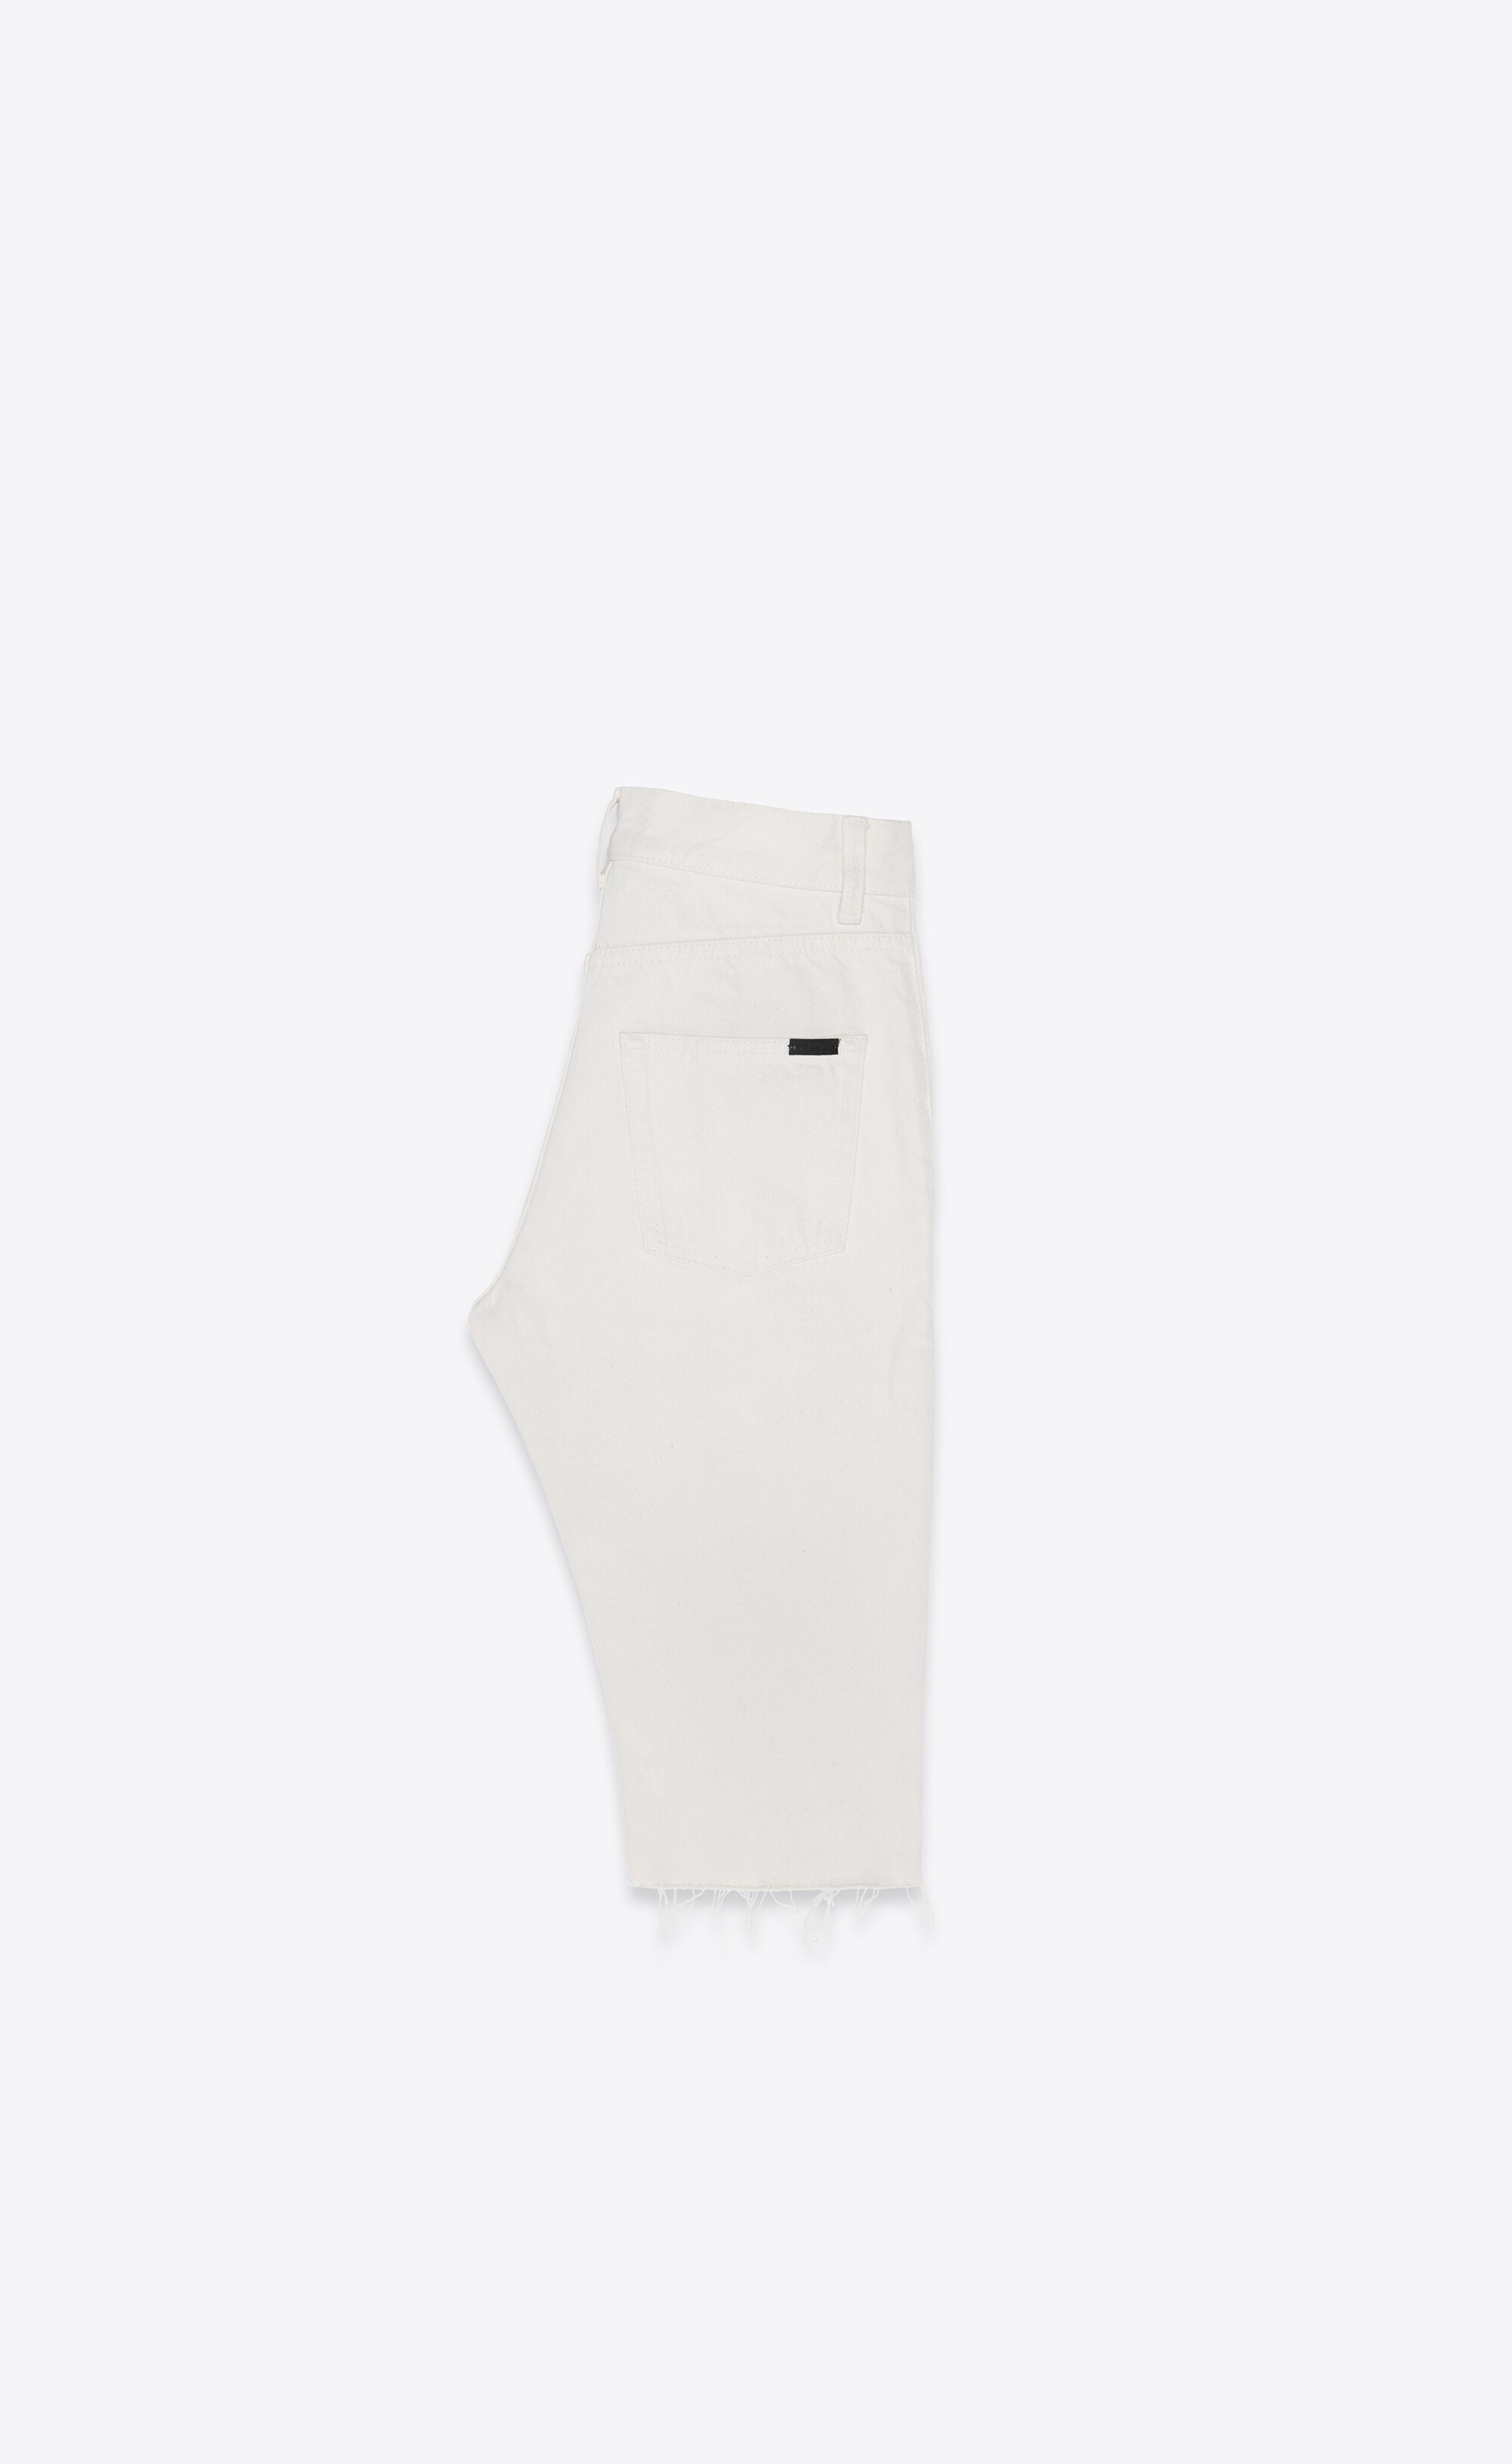 long bermuda shorts in caribbean white denim - 2